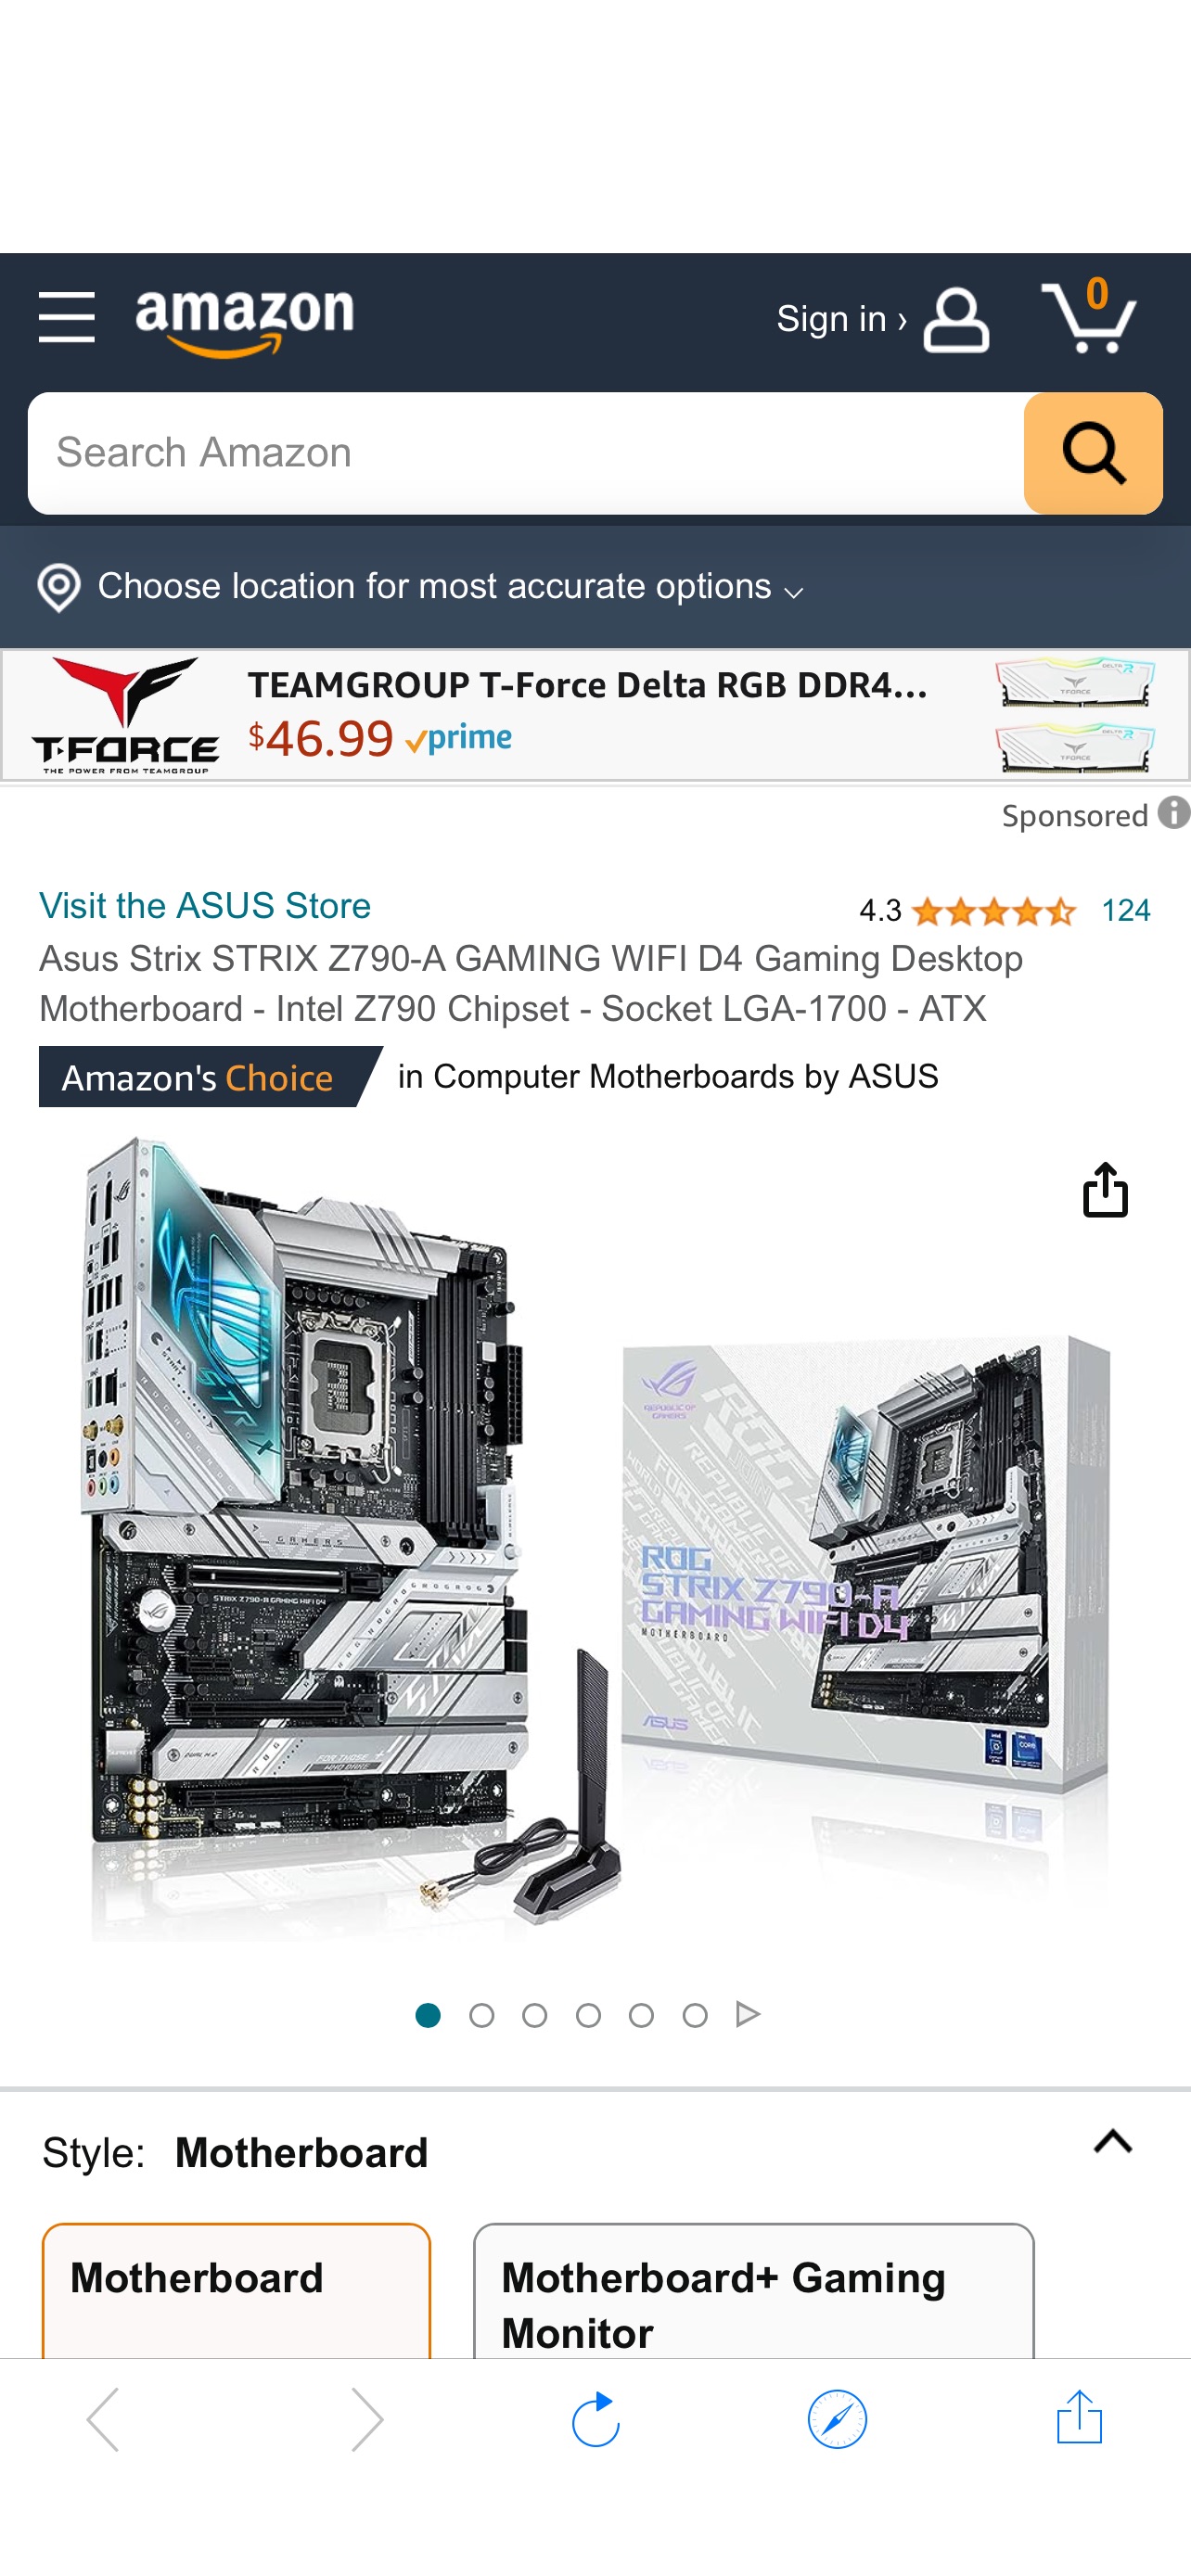 Amazon.com: Asus Strix STRIX Z790-A GAMING WIFI D4 Gaming Desktop Motherboard - Intel Z790 Chipset - Socket LGA-1700 - ATX : Electronics